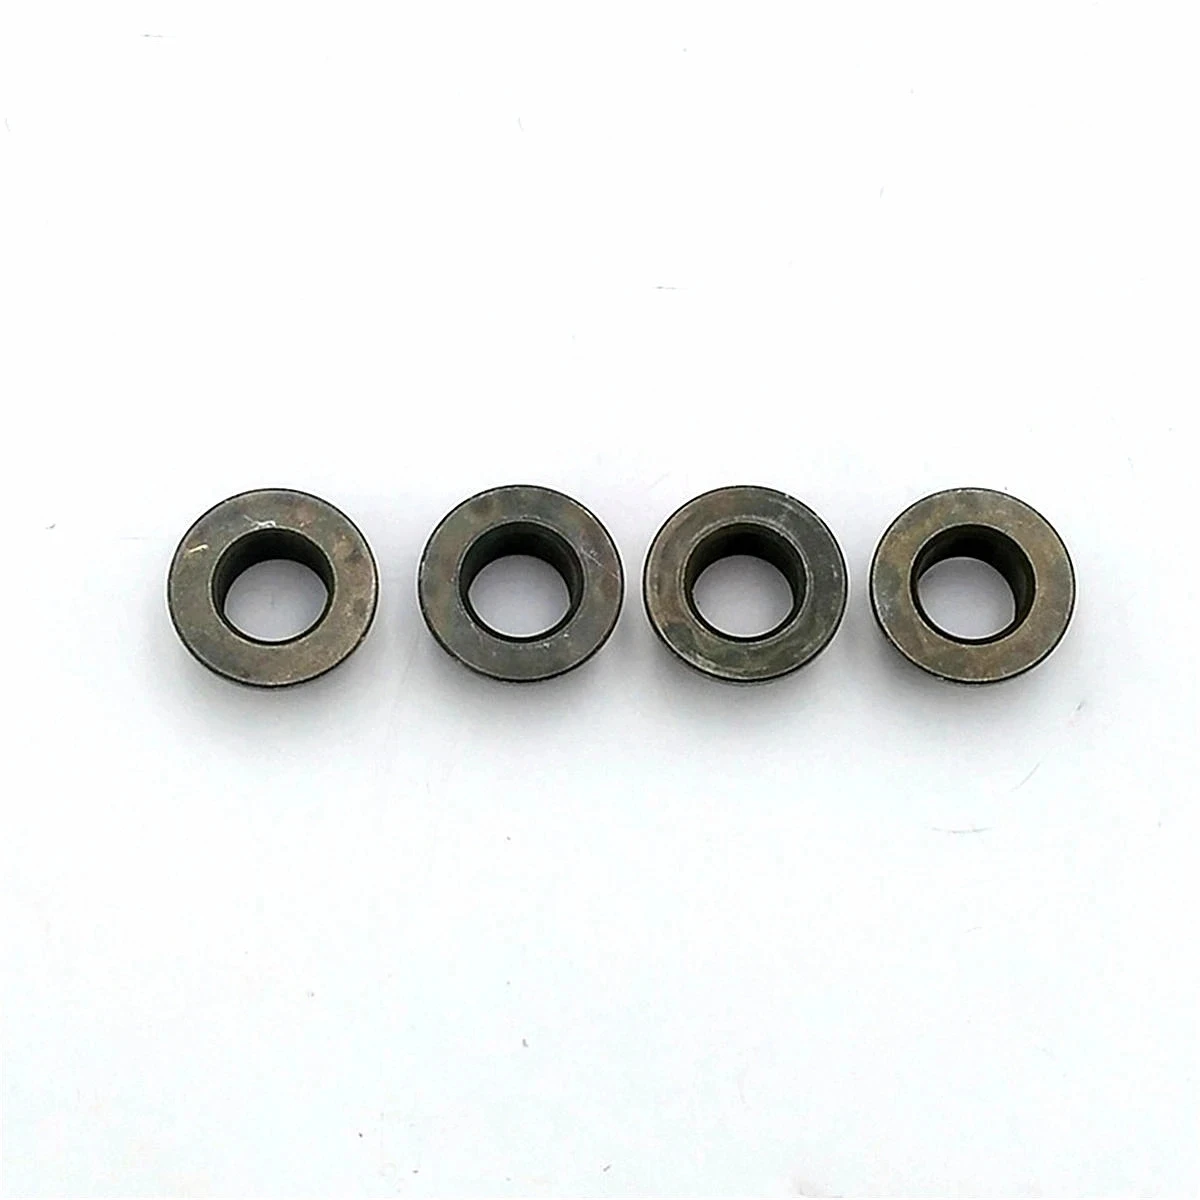 wheel rim shaft install nut for CF500 spare parts 9010-070003 one set include 4pieces nut QUAD GO KART